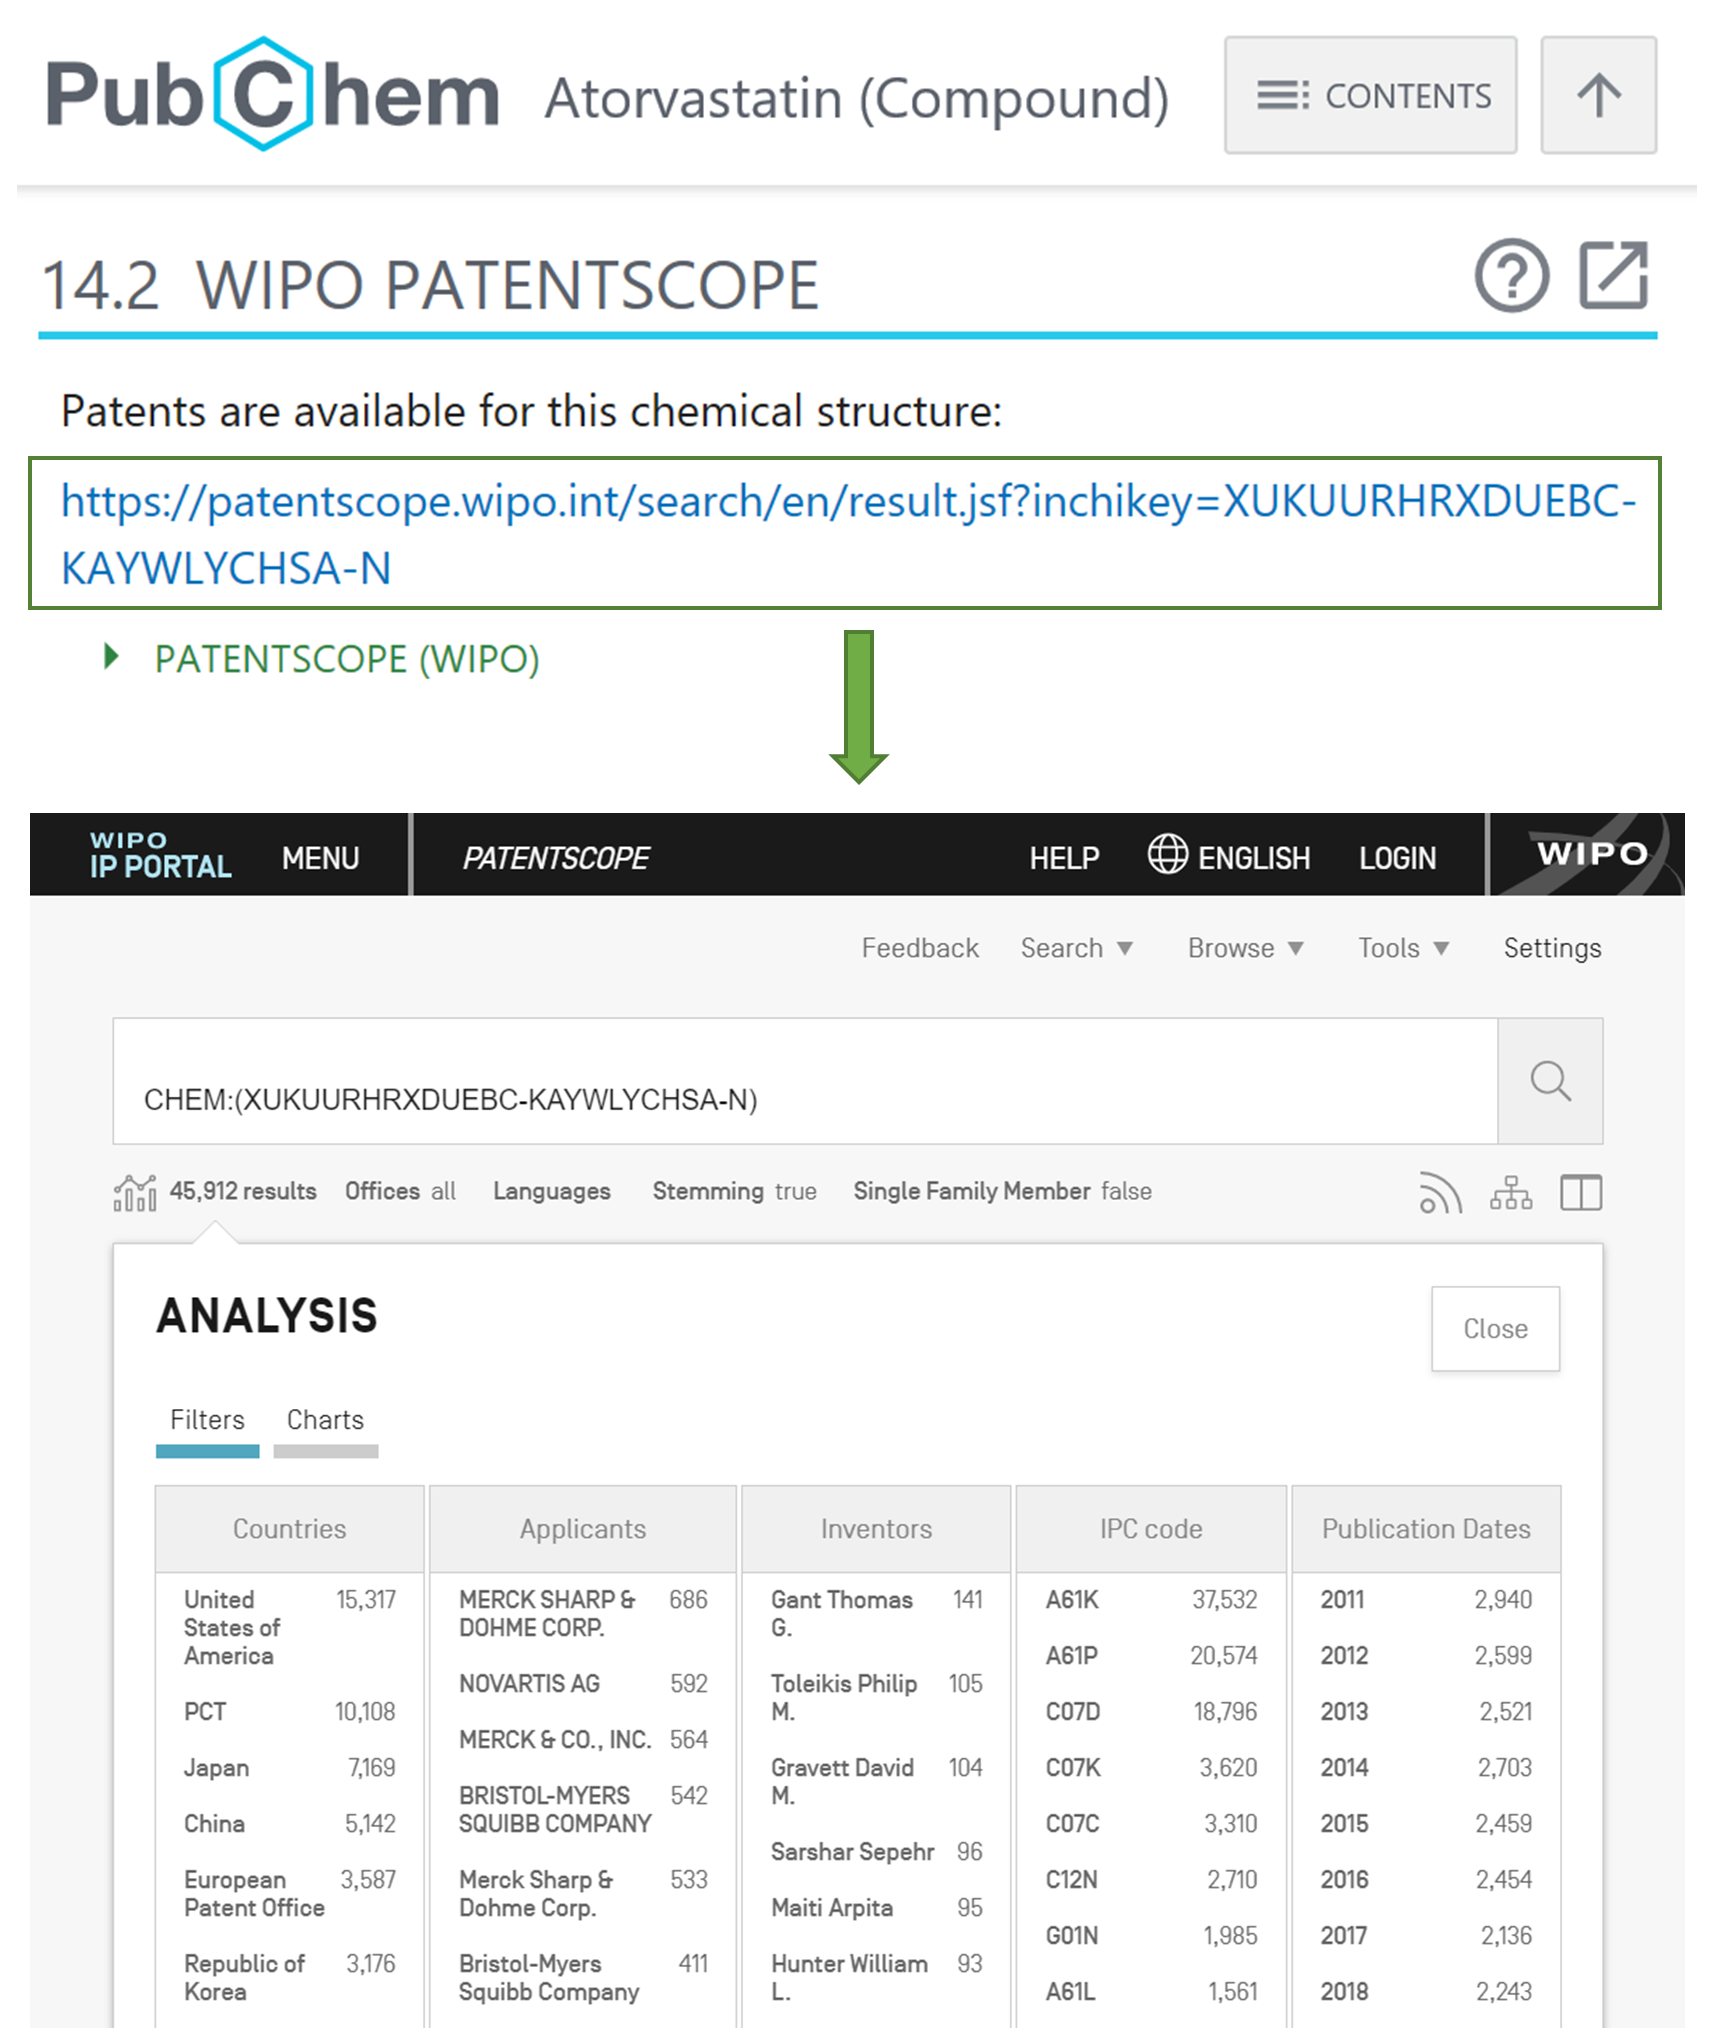 PubChem-WIPO data integration